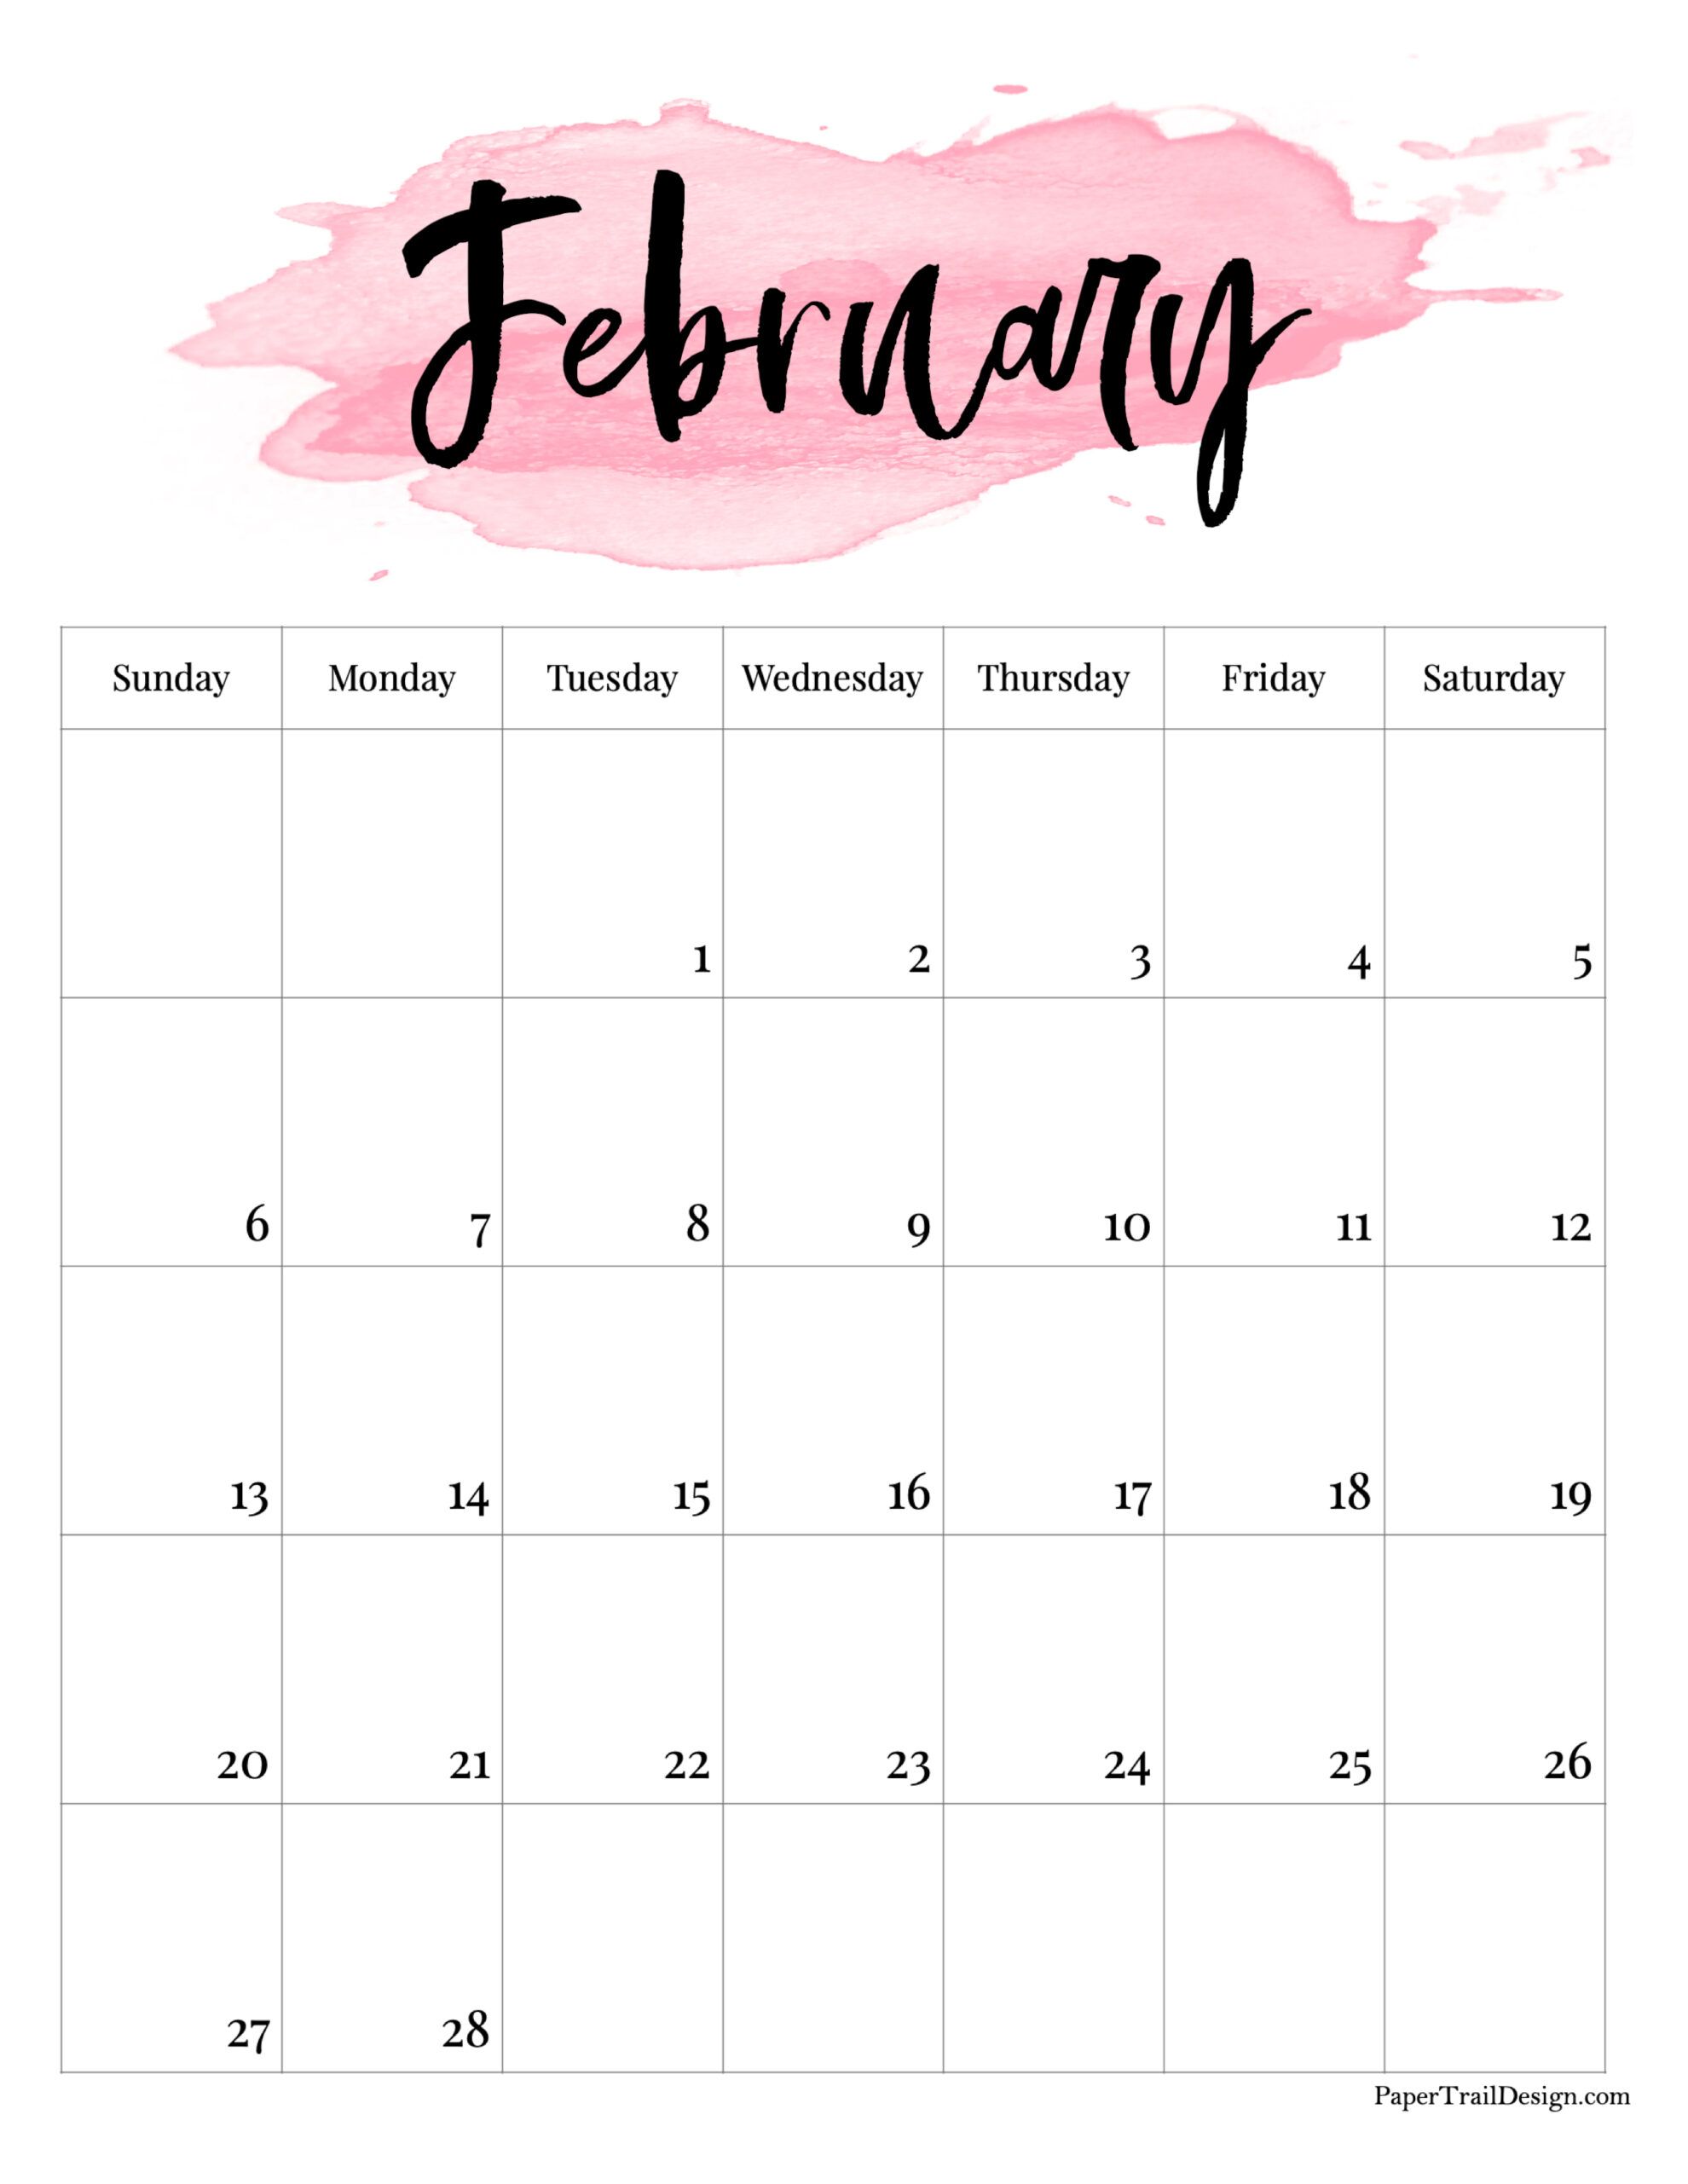 Free Printable February 2022 Calendar 2022 Printable Calendar - Watercolor - Paper Trail Design